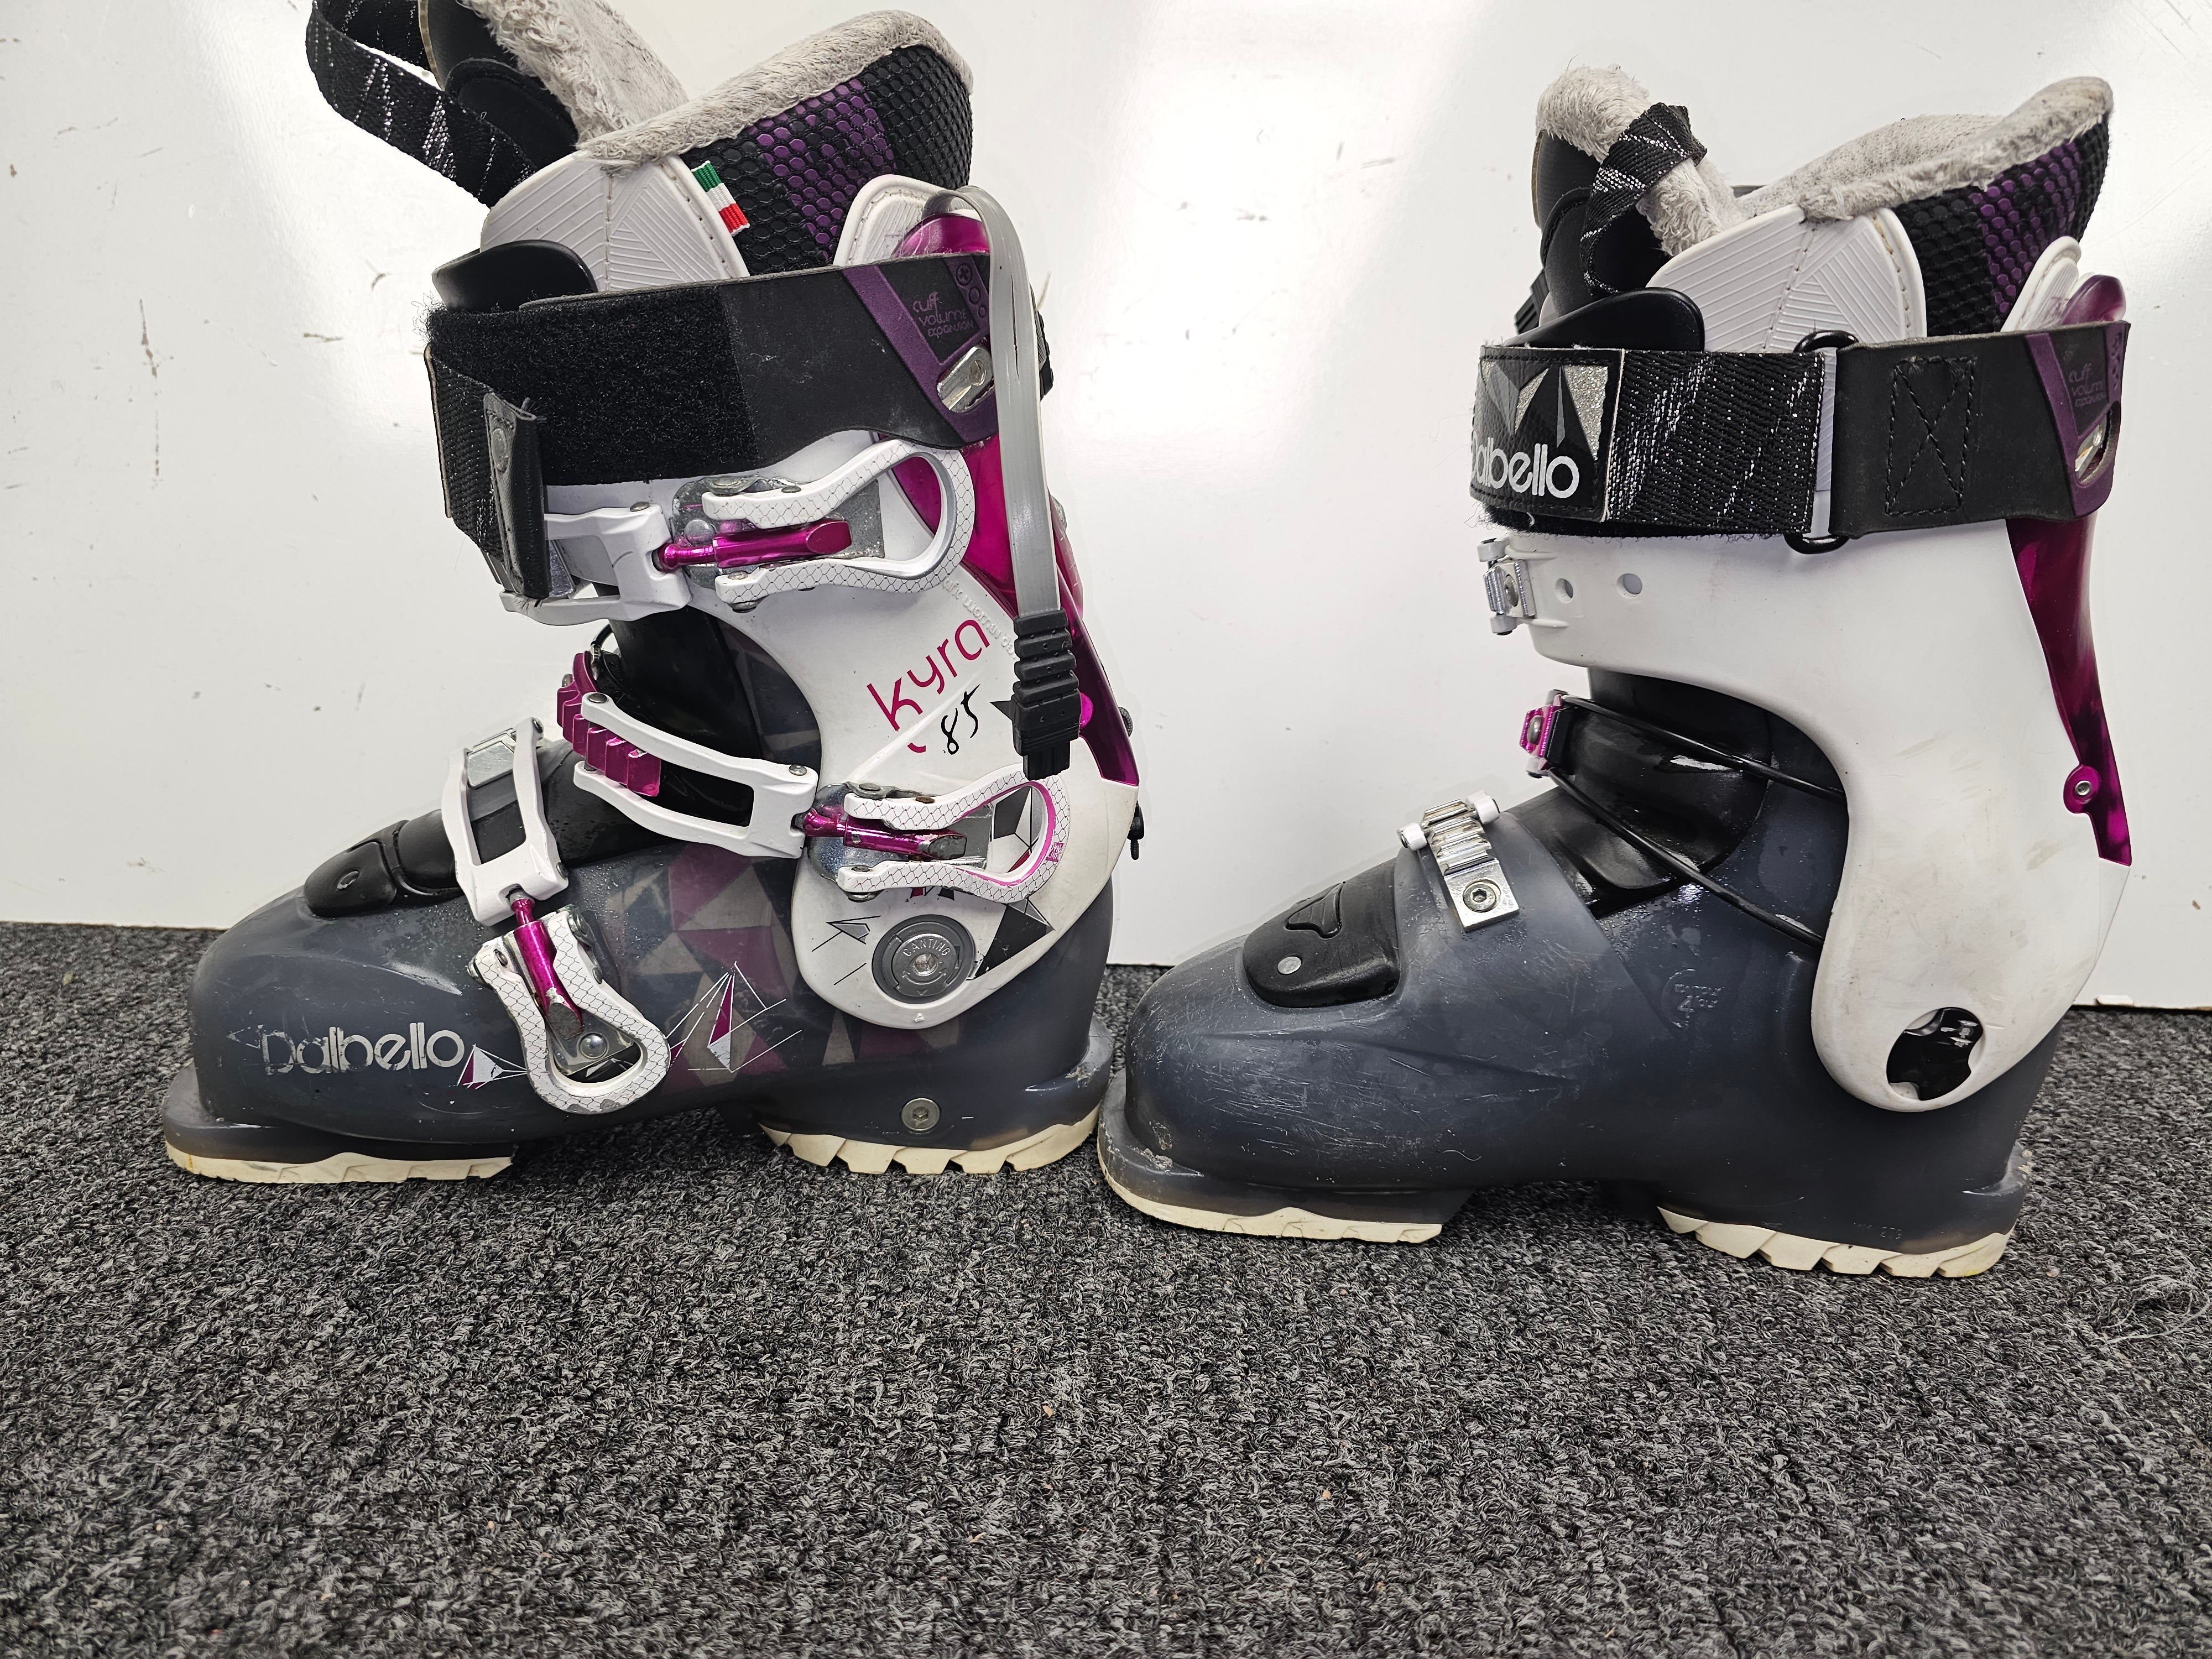 Ski Boots Women Dalbello Kyra 85